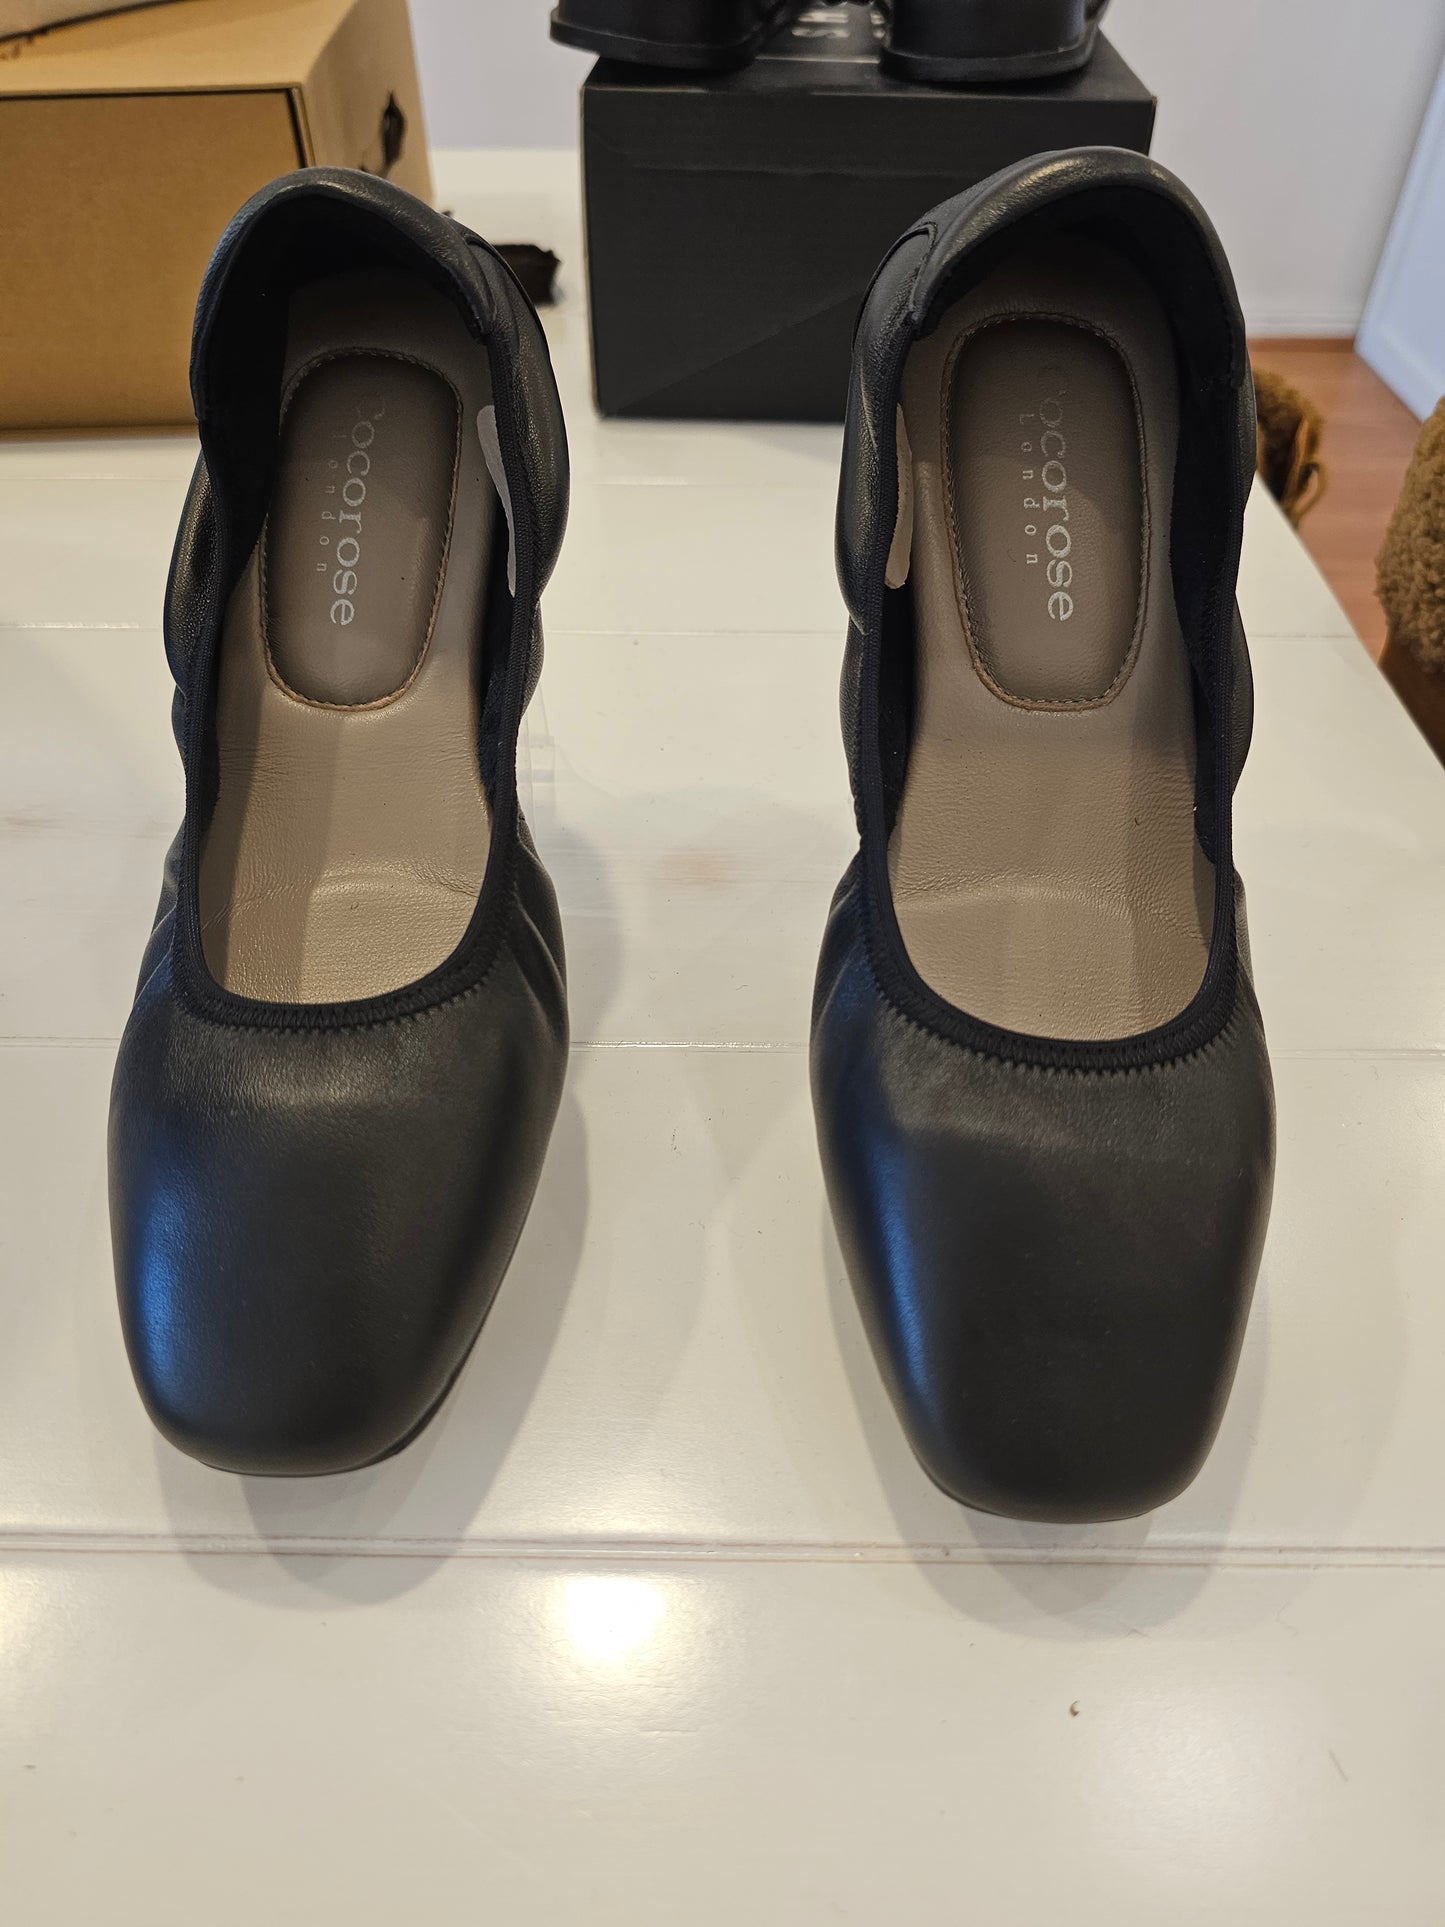 Barnes - Black Leather Ballet Flat - Sizes 6, 7, 10, 11